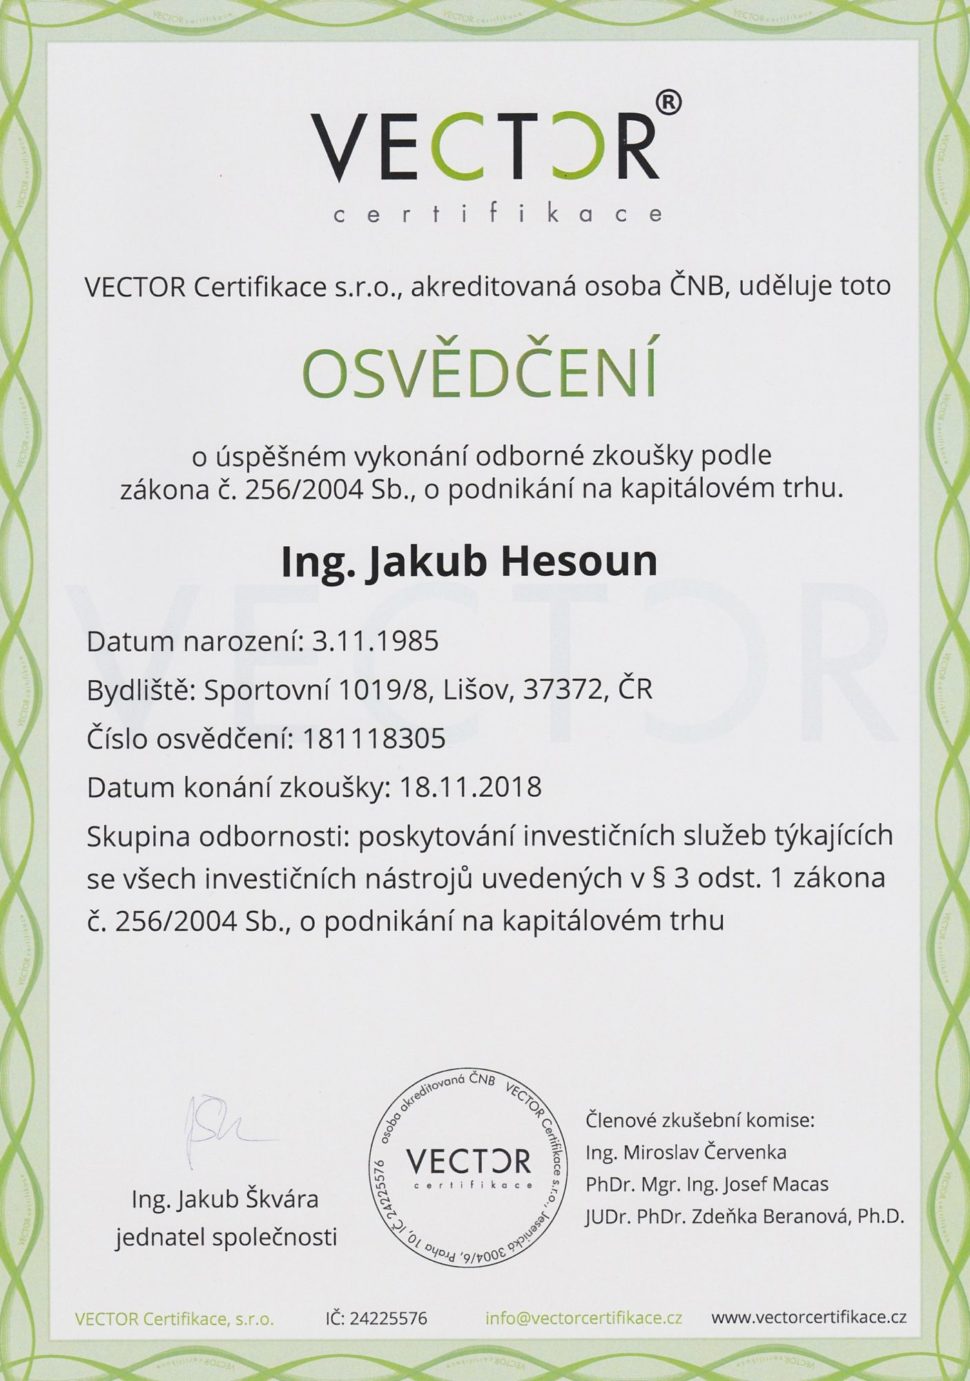 Udělila: VECTOR Certifikace